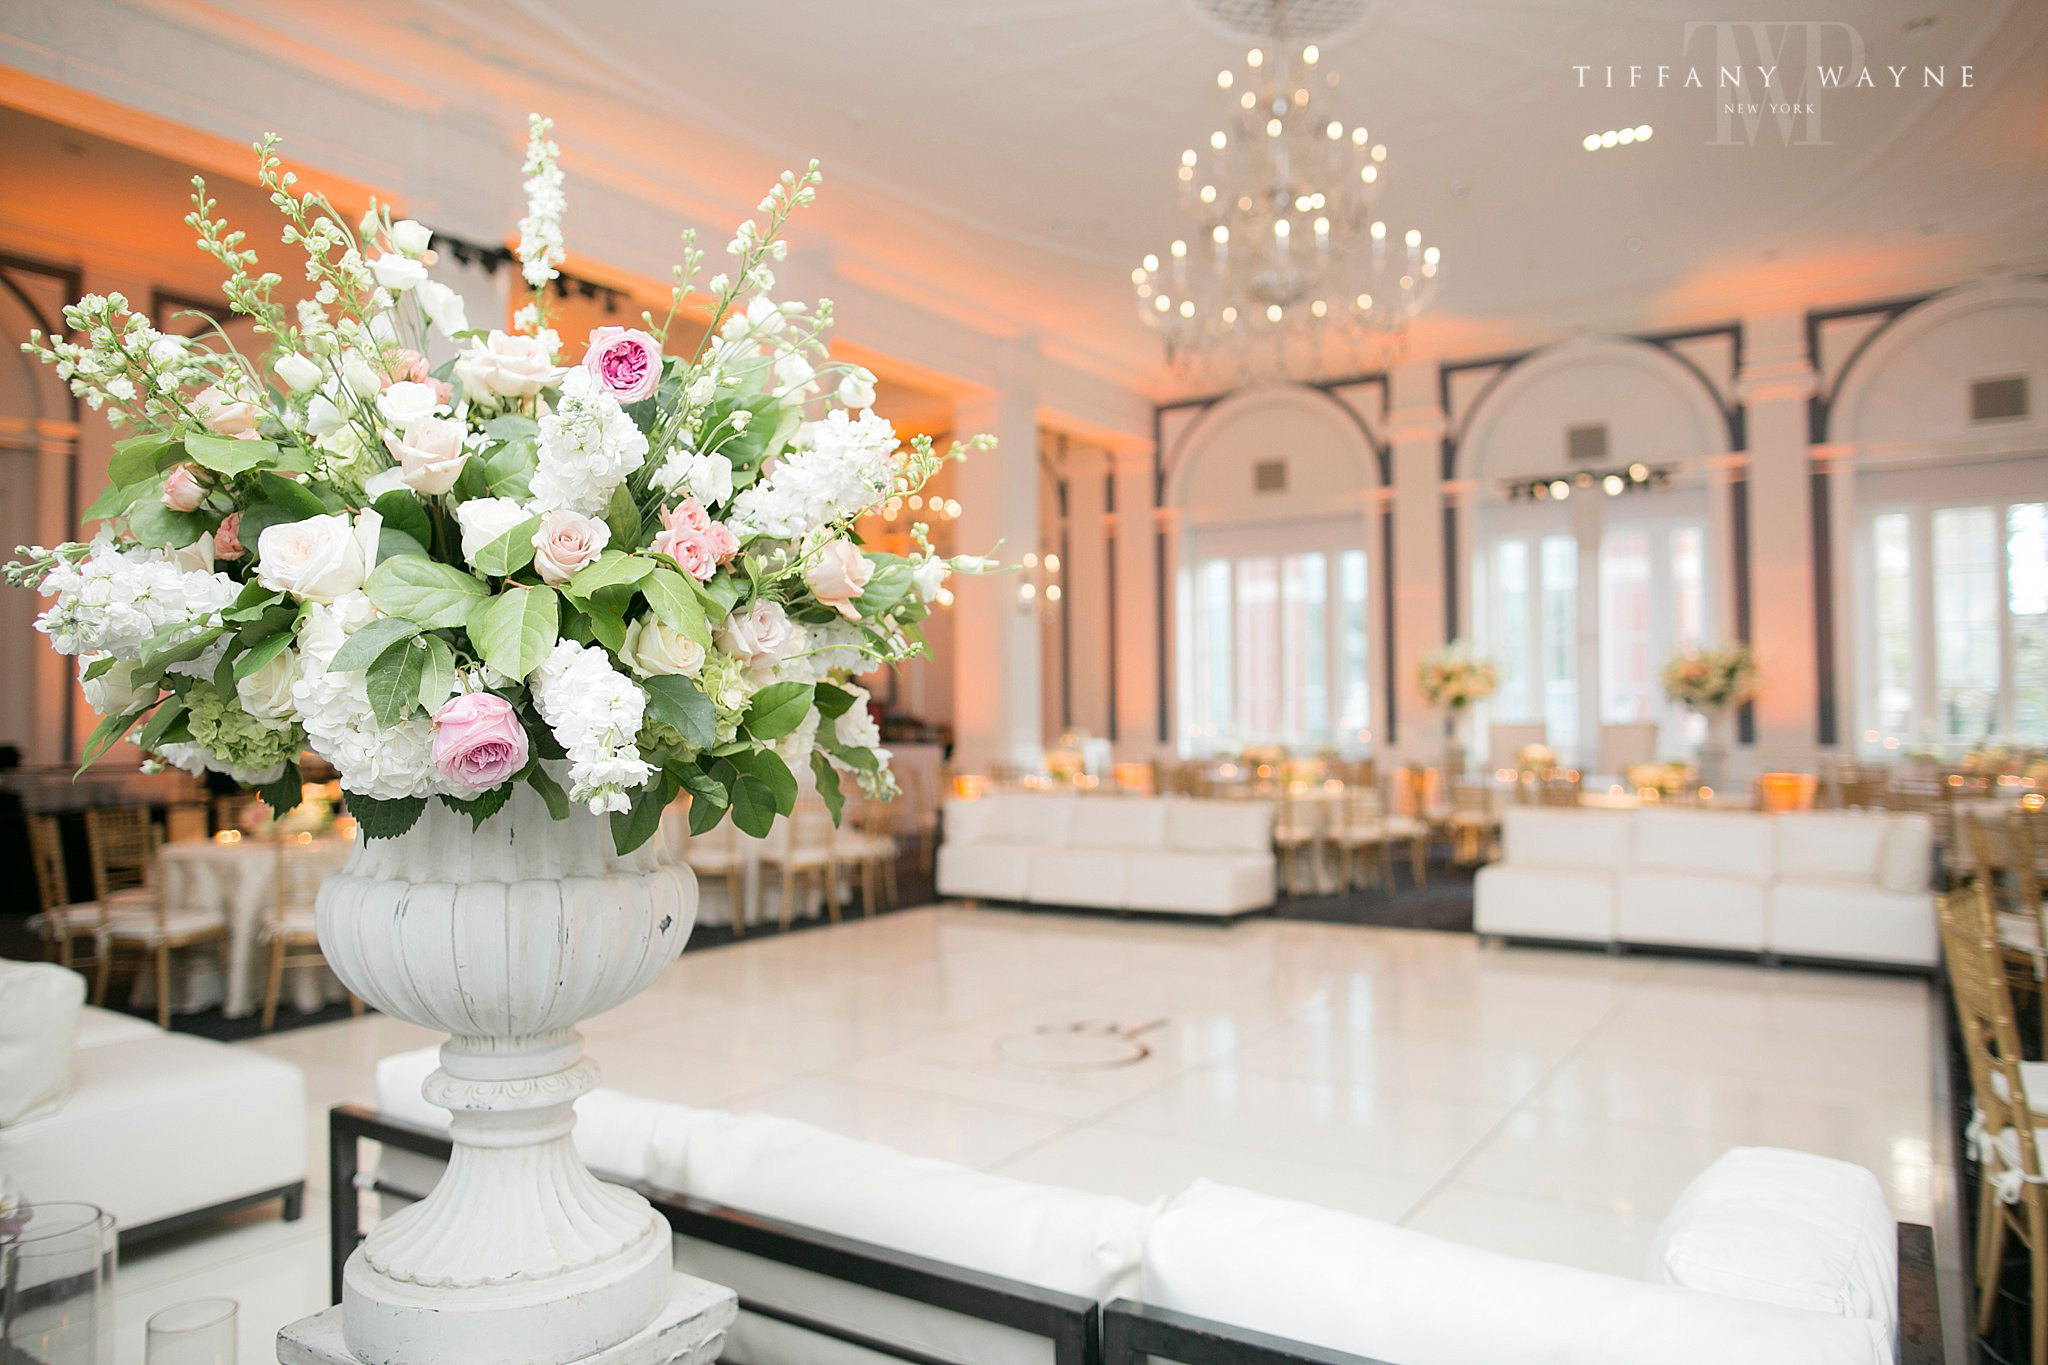 elegant wedding reception at Renaissance Hotel photographed by Tiffany Wayne Photography